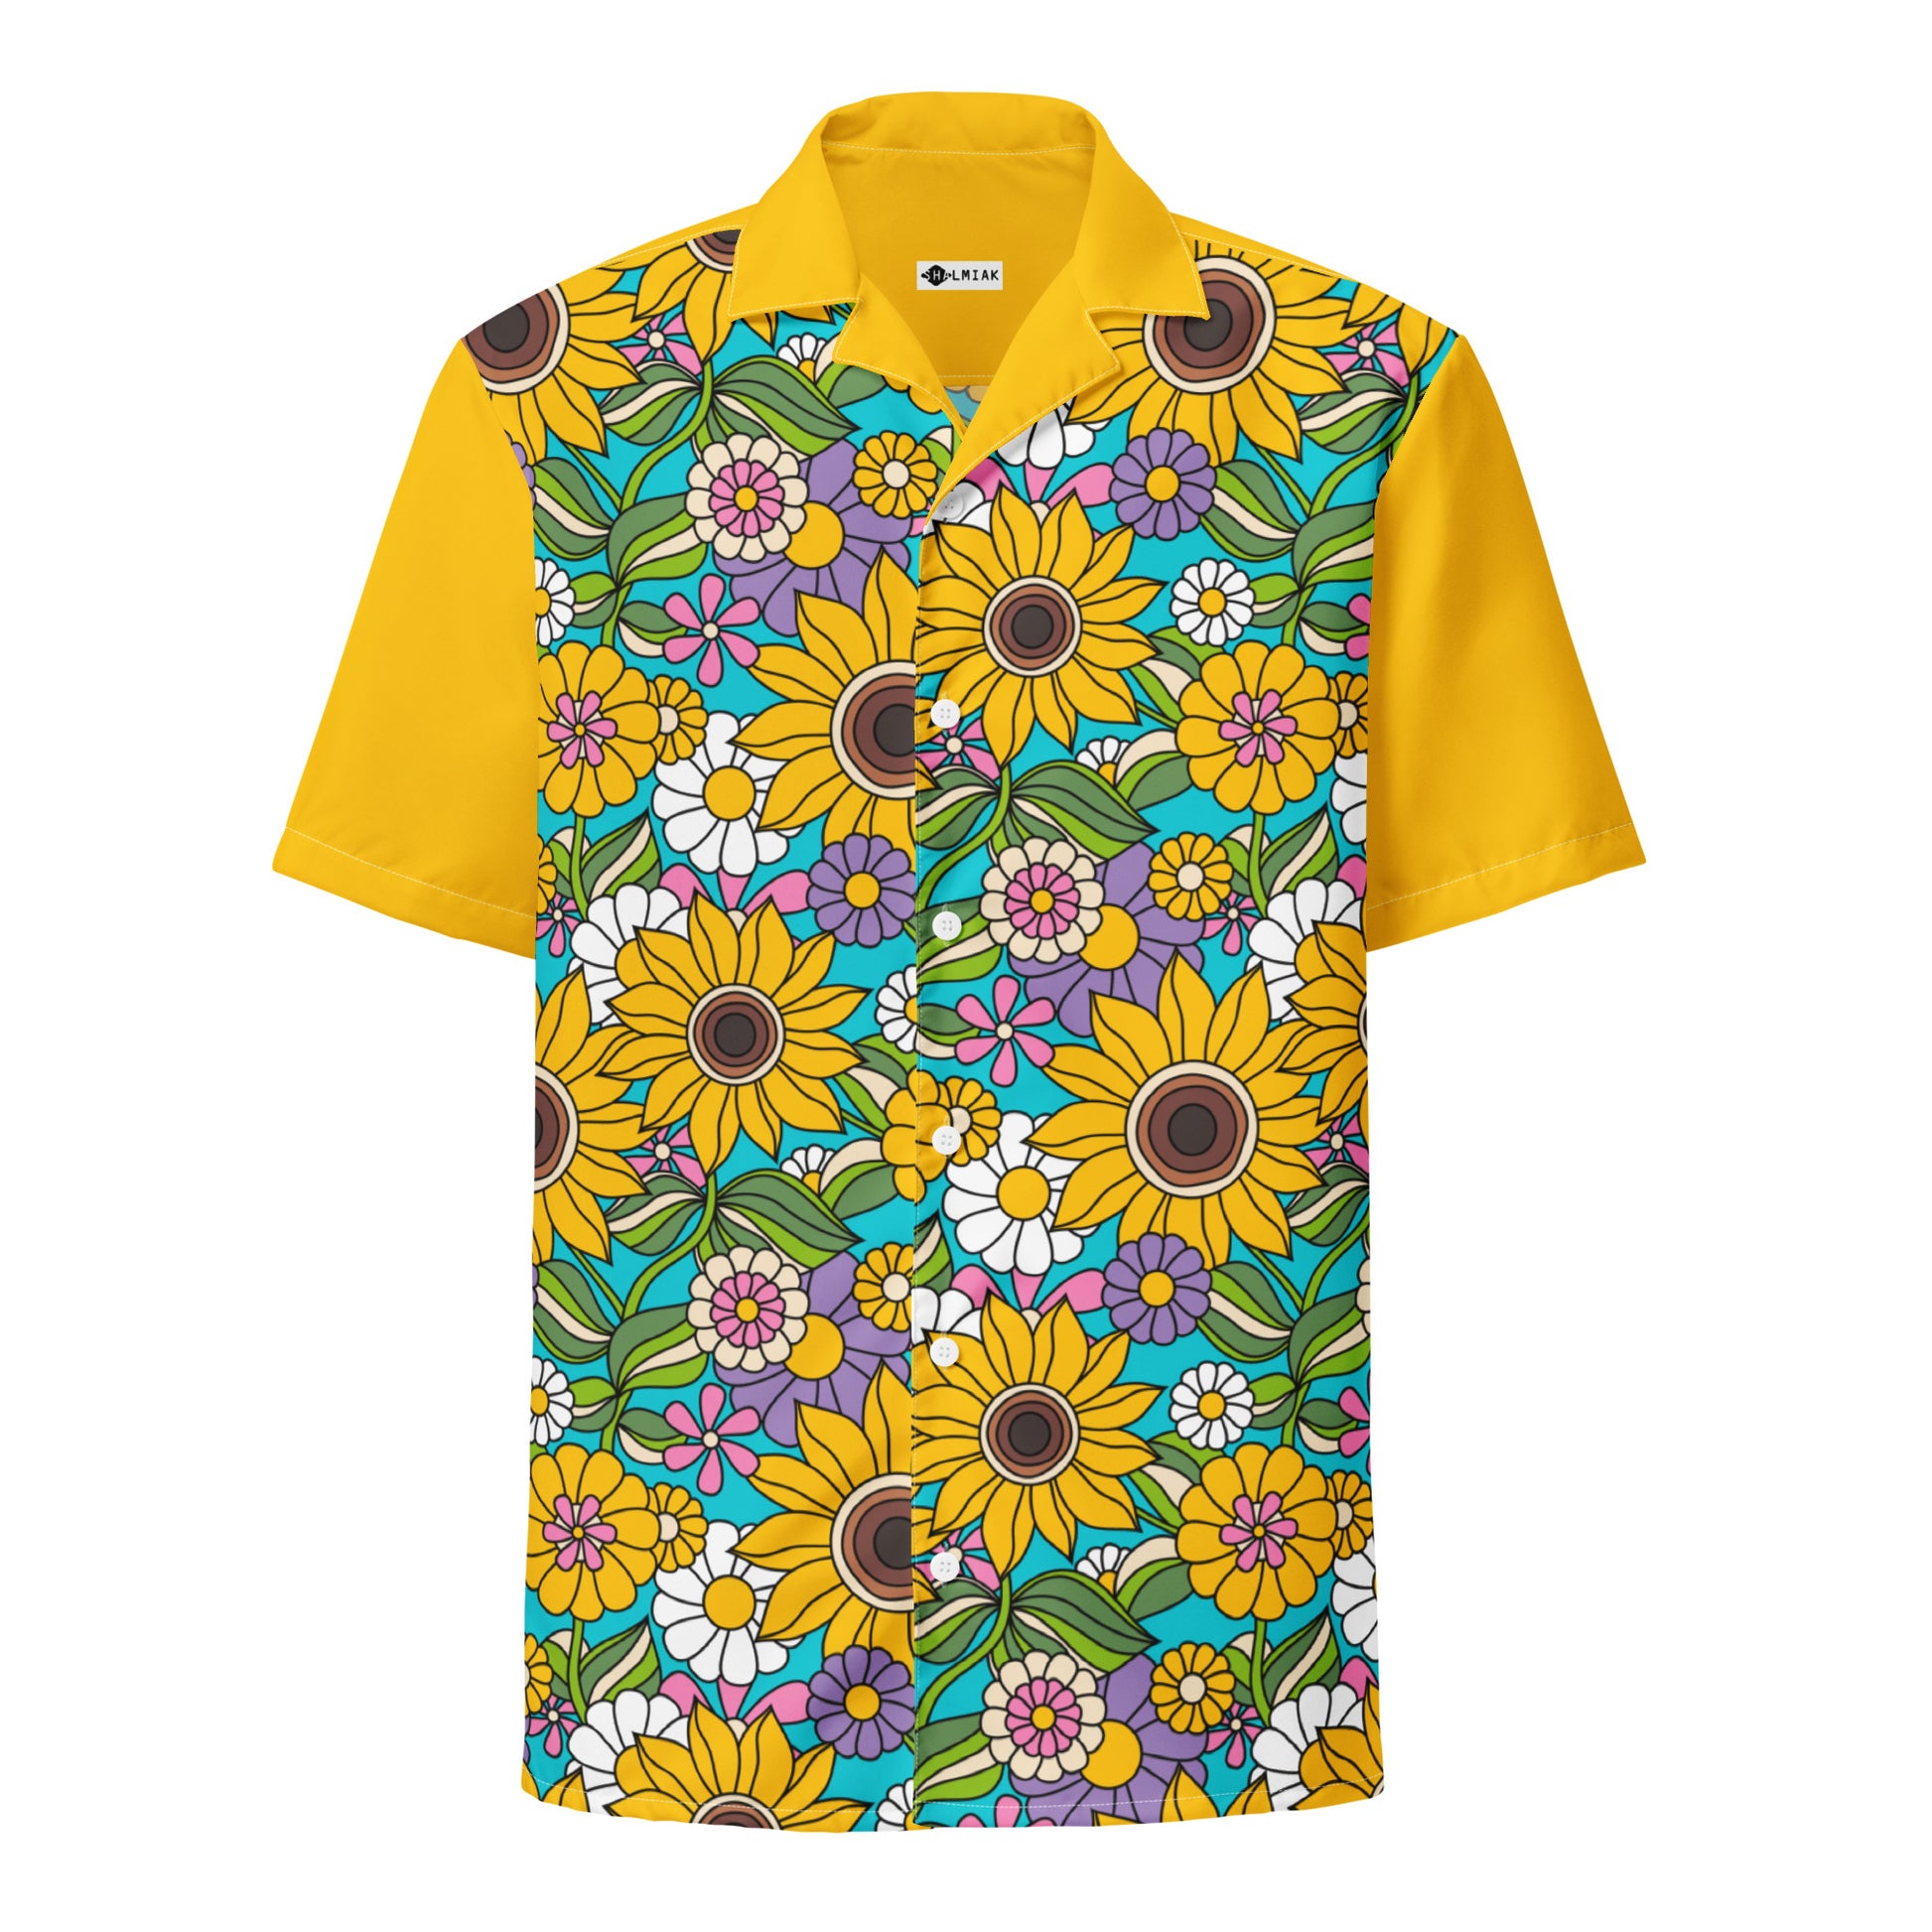 SUNDANCE yellow - Unisex button shirt